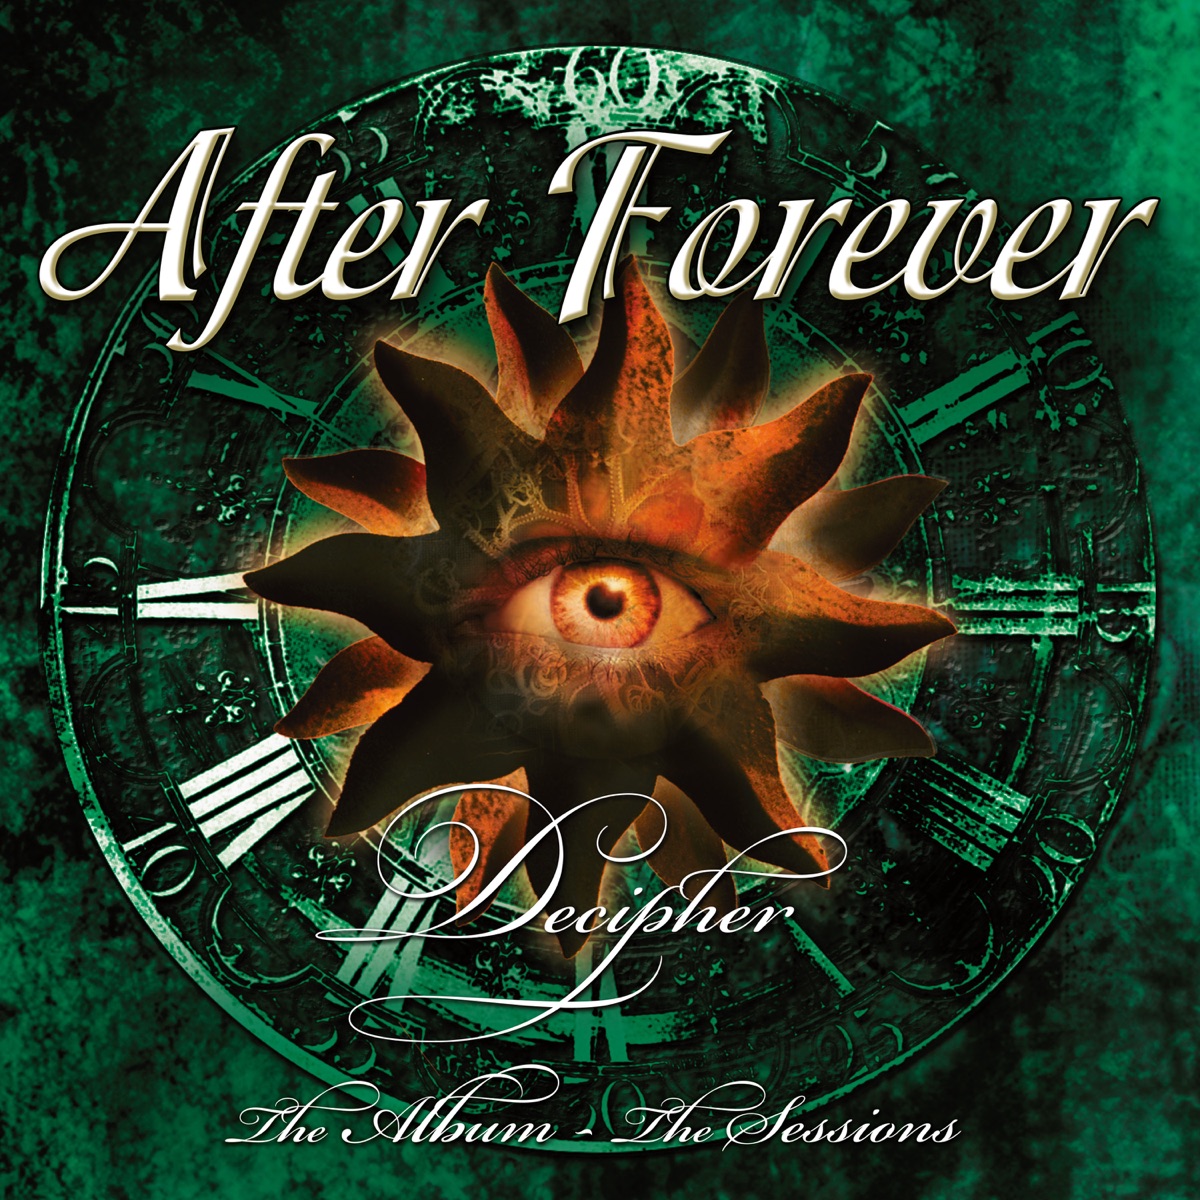 After Forever [DVD] [Import]